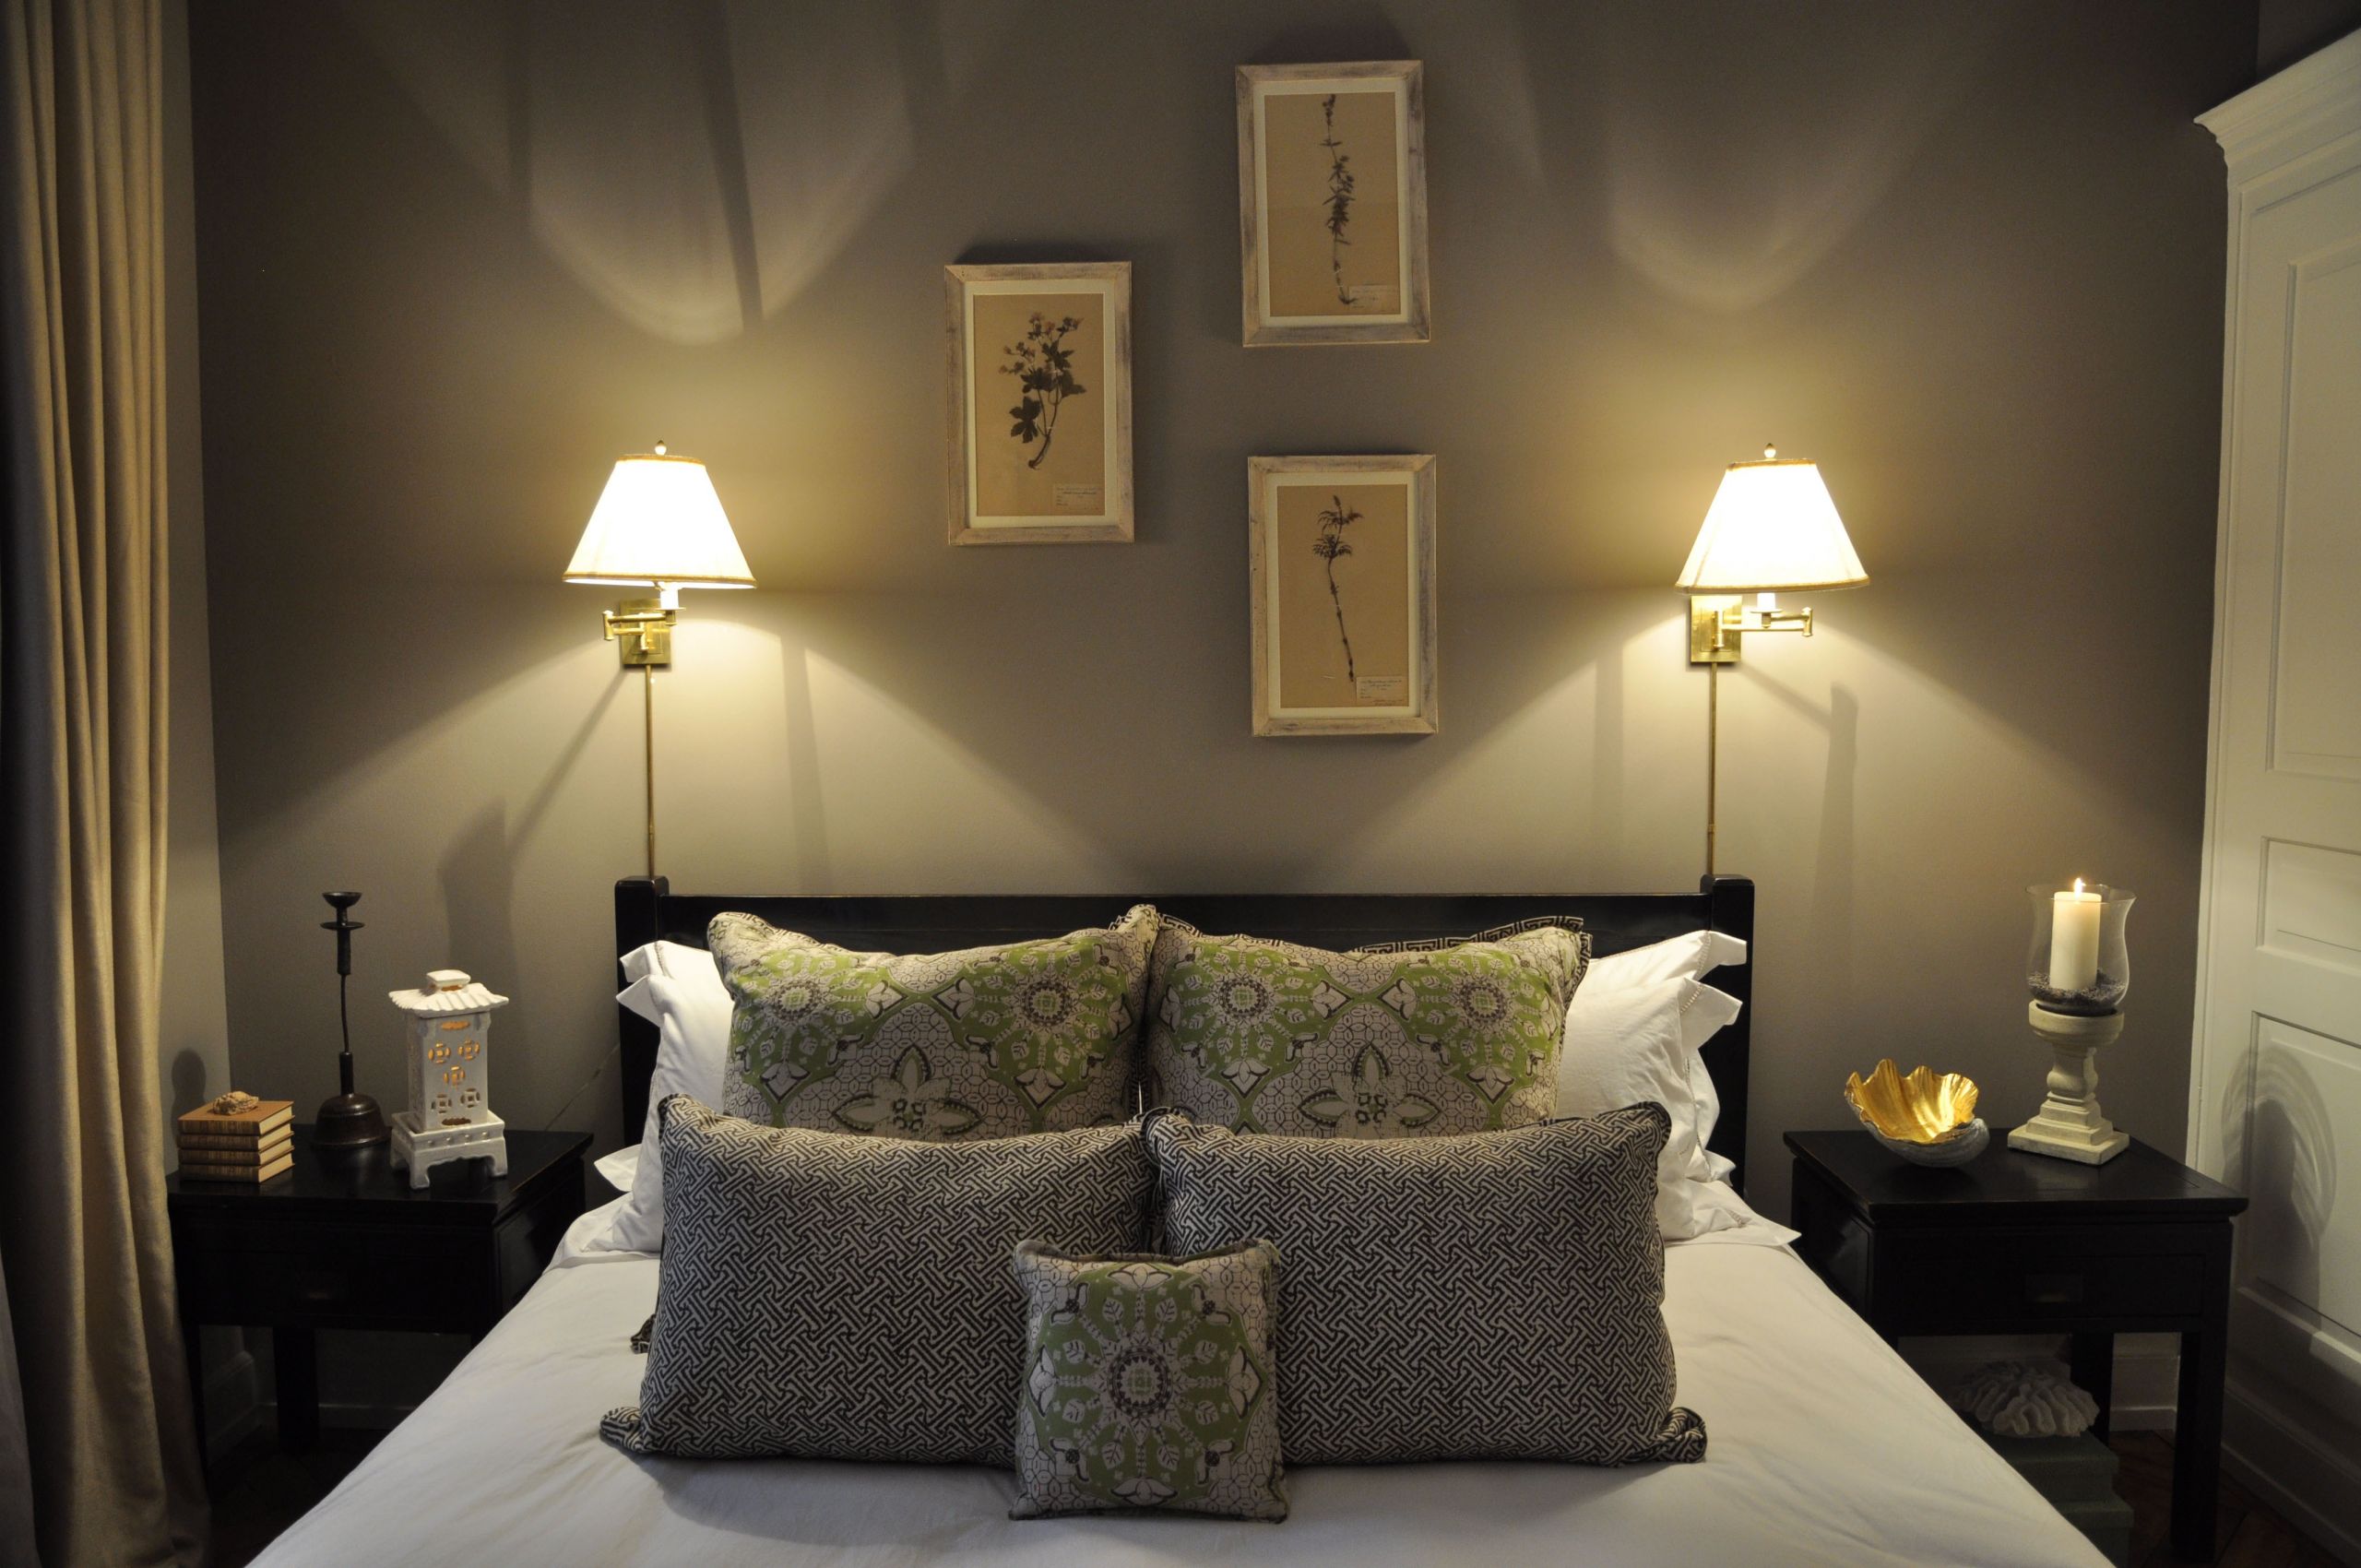 Wall Lights Bedroom
 Popular Plug In Wall Lamps For Bedroom Ideas Bedroom